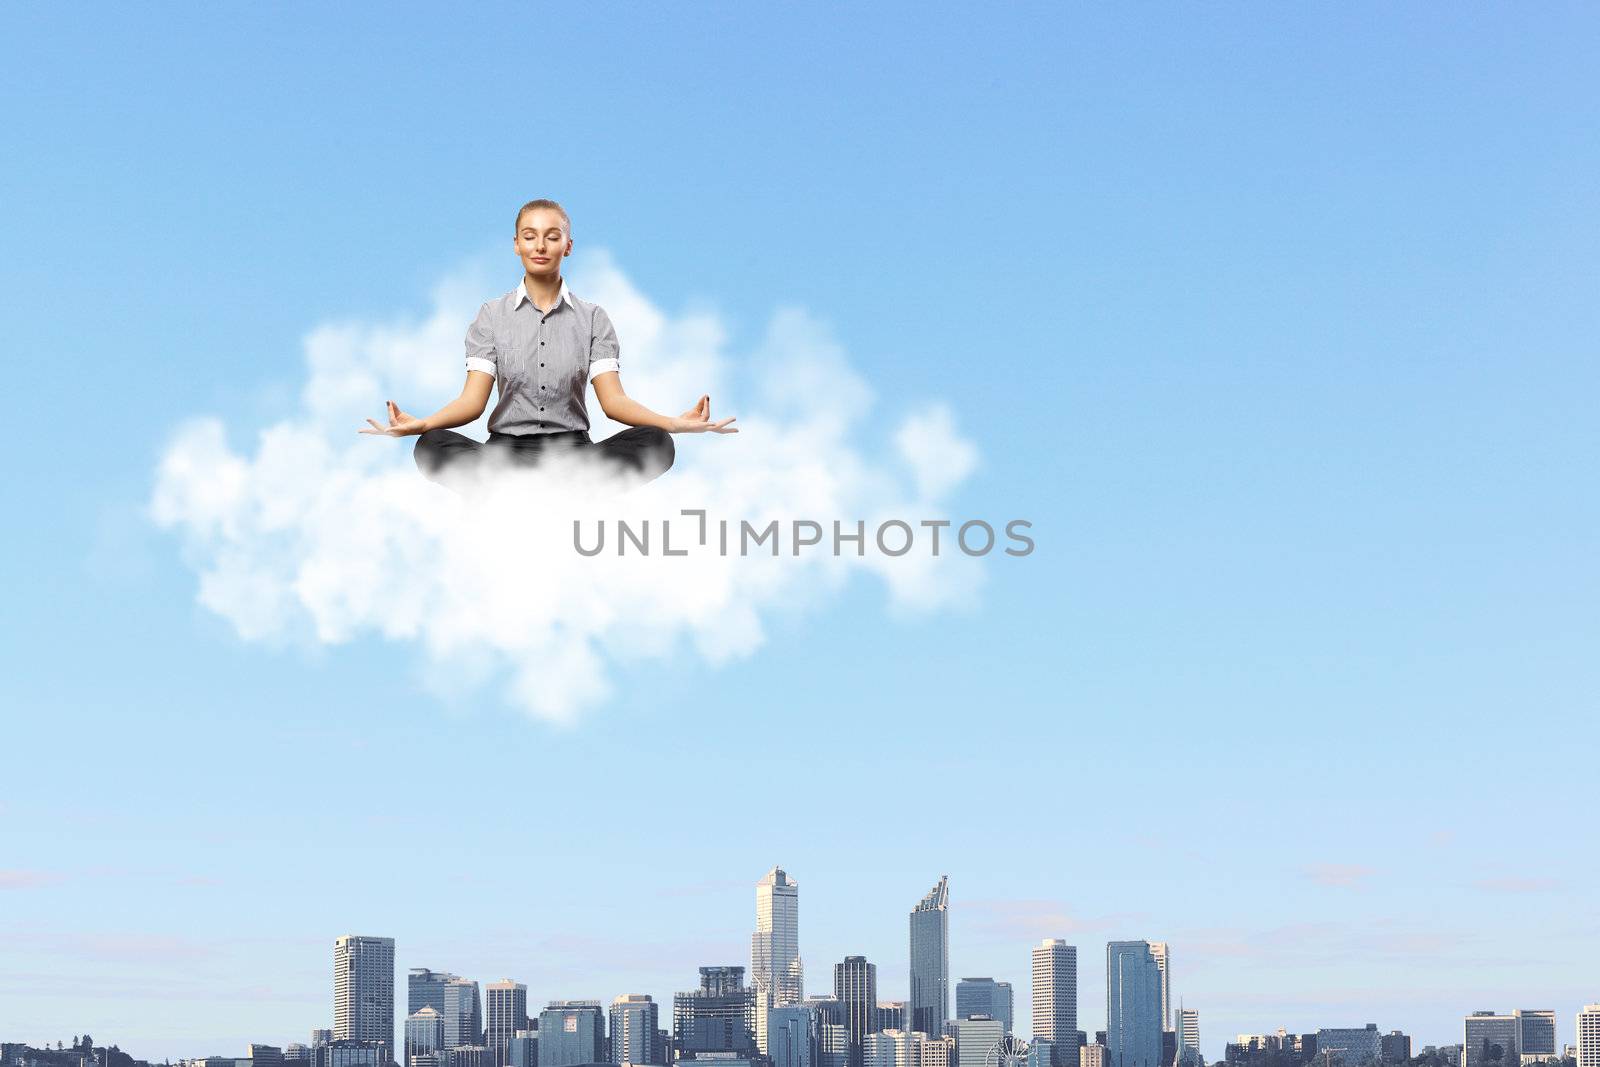 Businessman meditating sitting on the white cloud